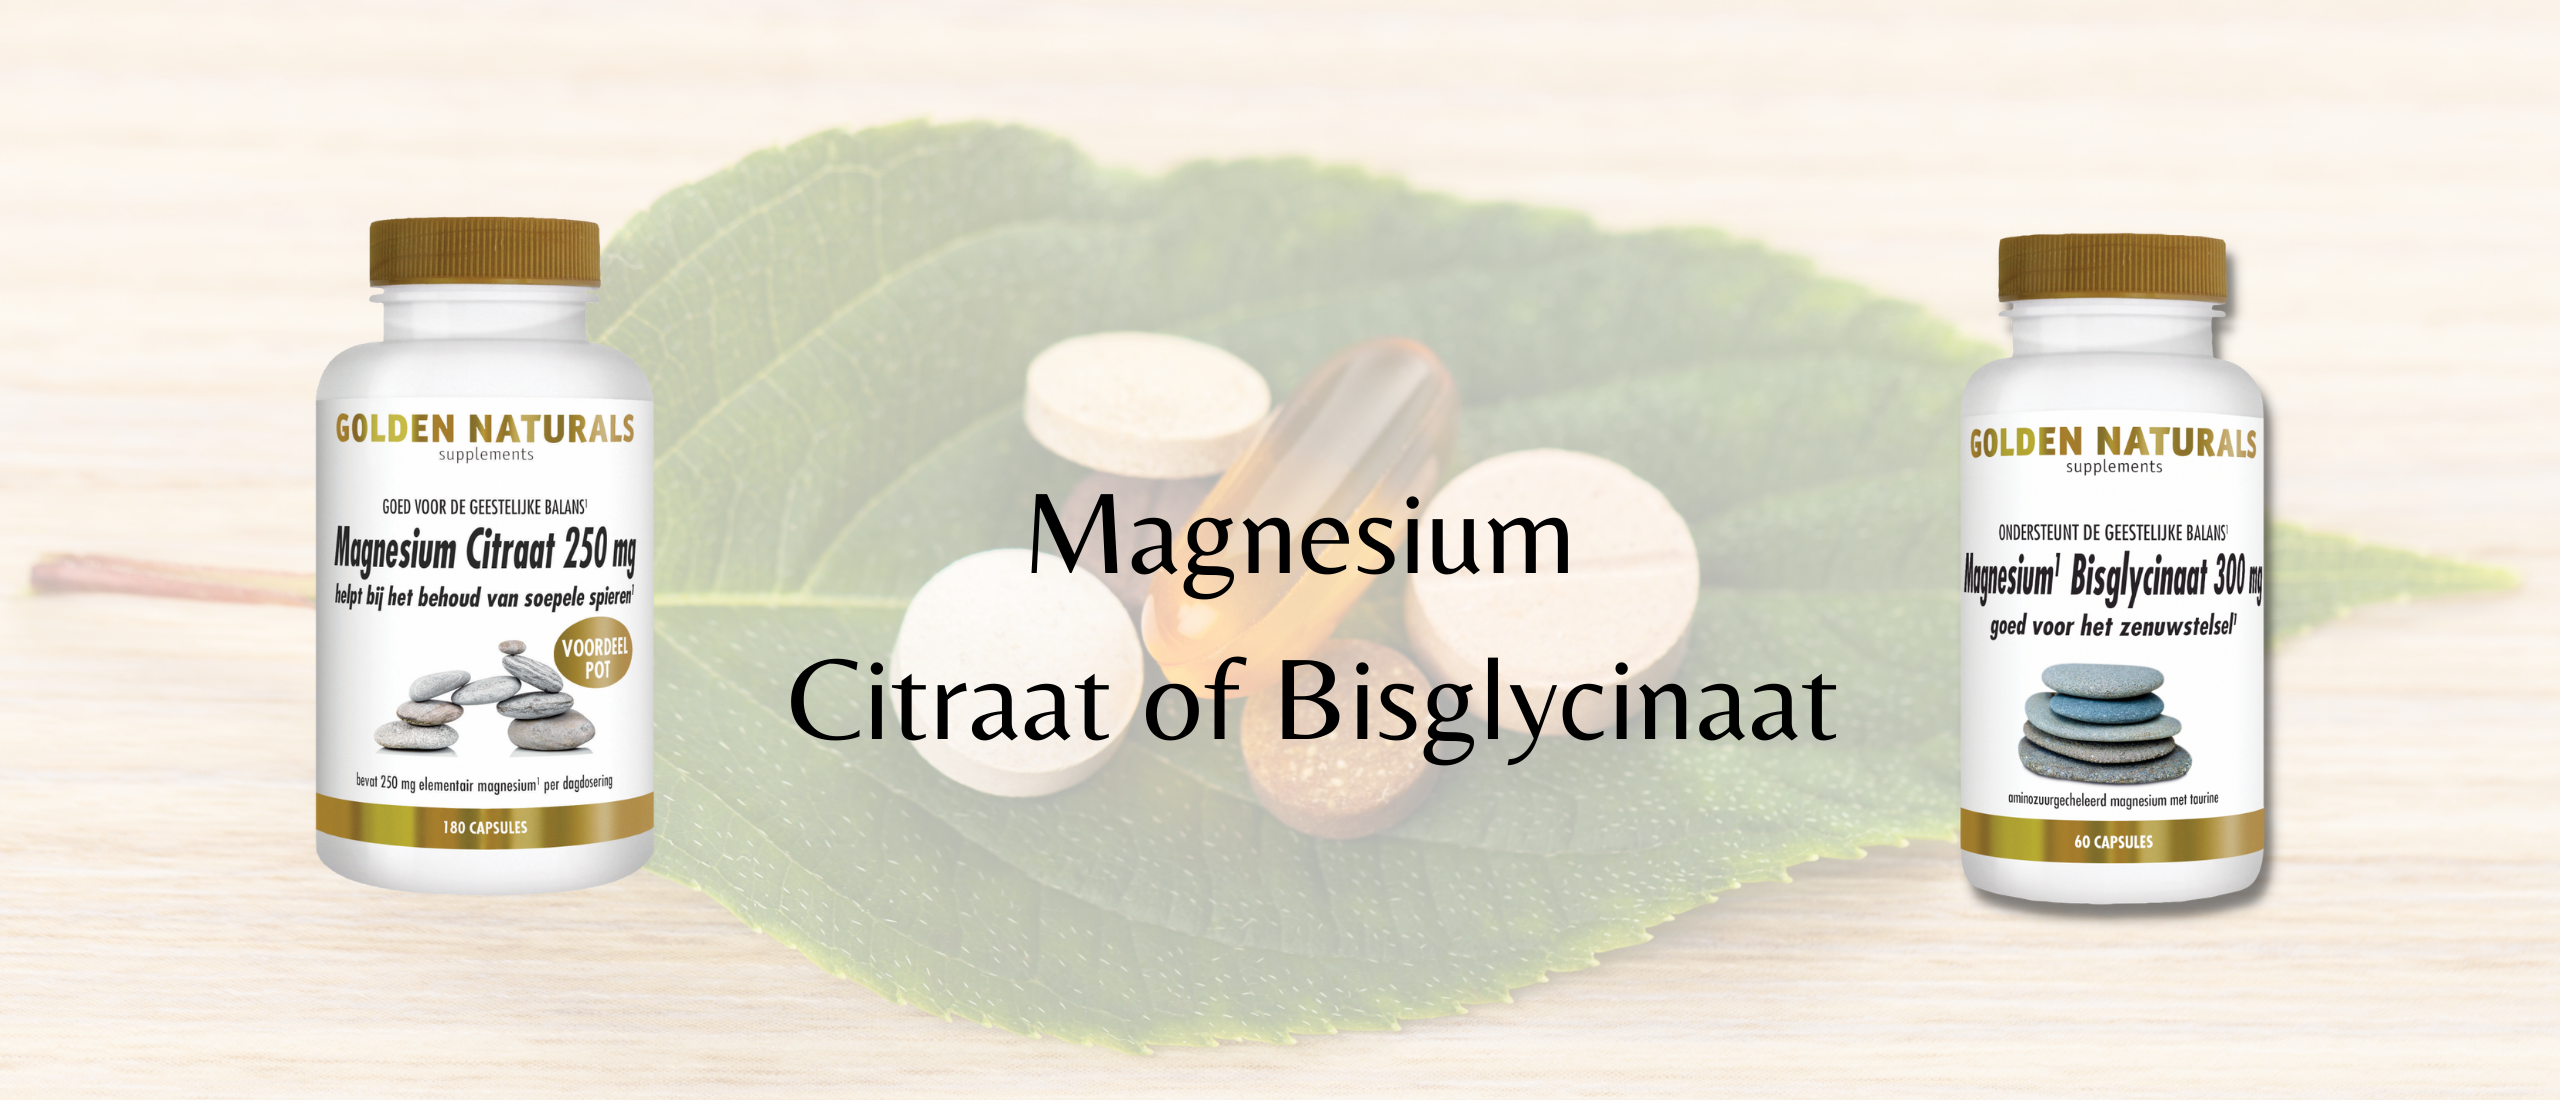 citraat of bisglycinaat magnesium